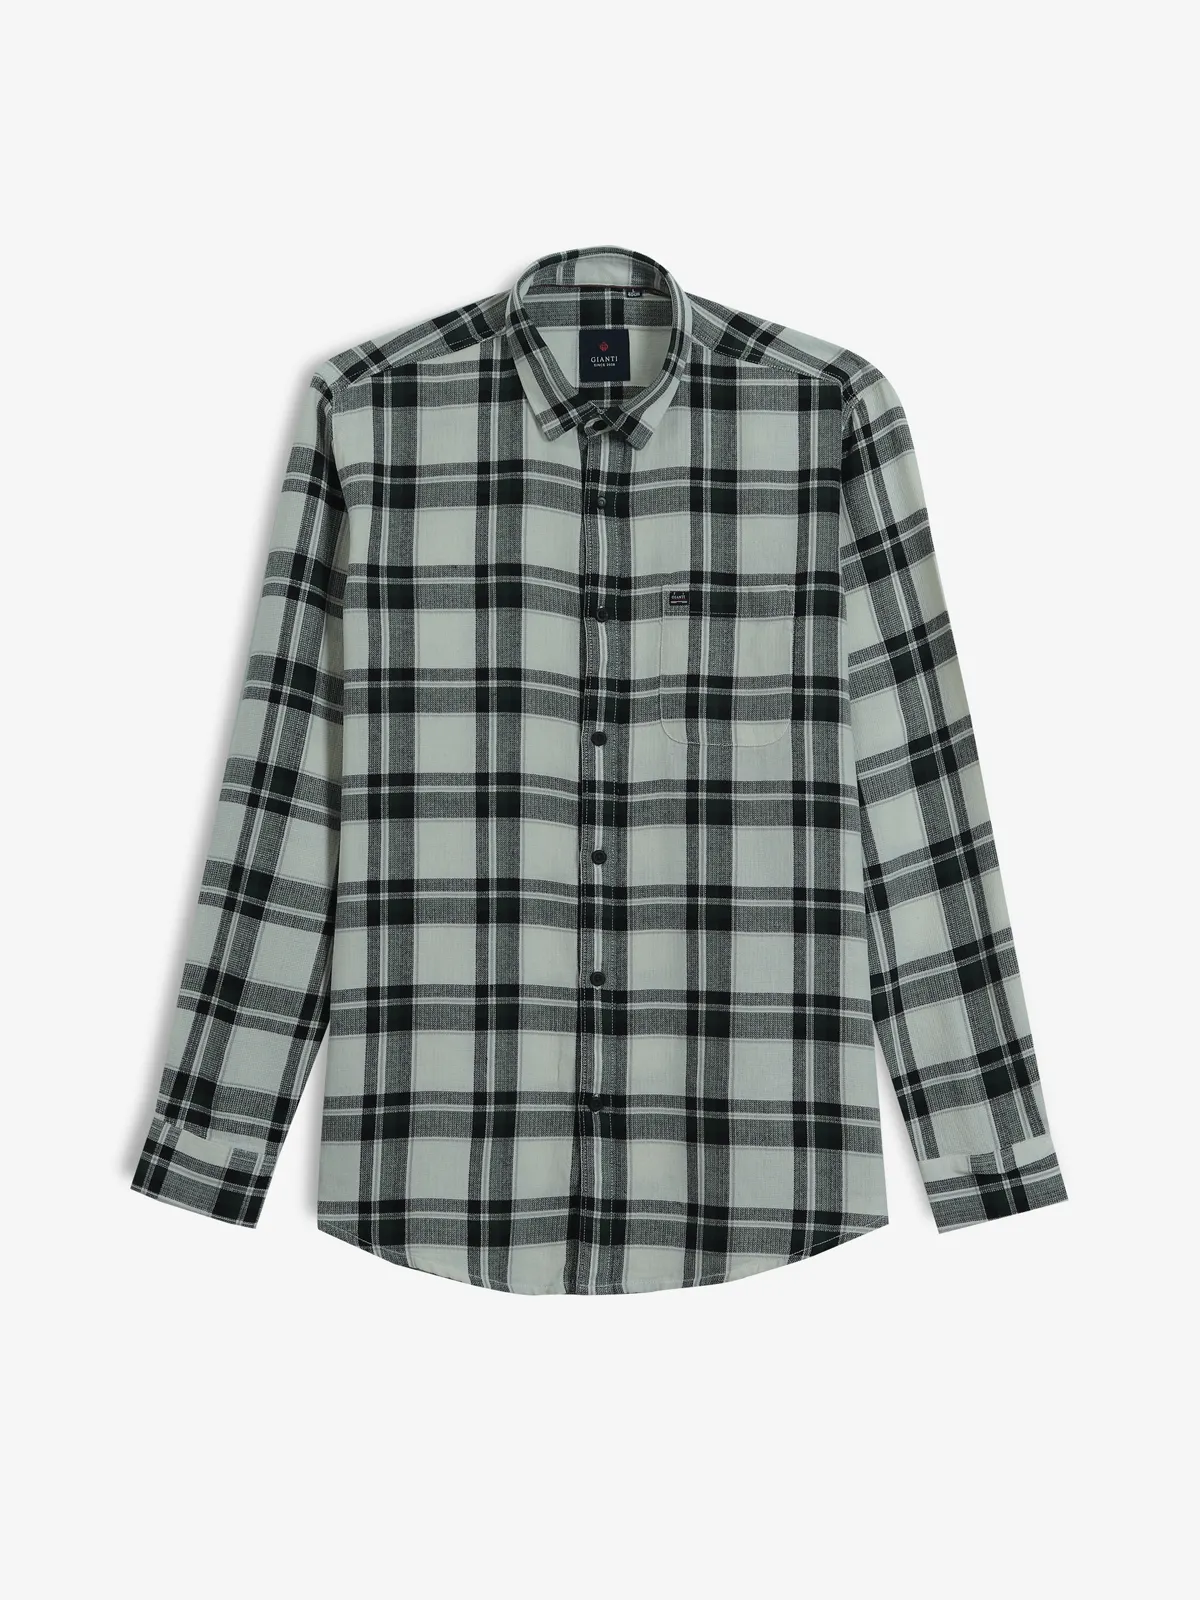 GIANTI black and off-white checks shirt